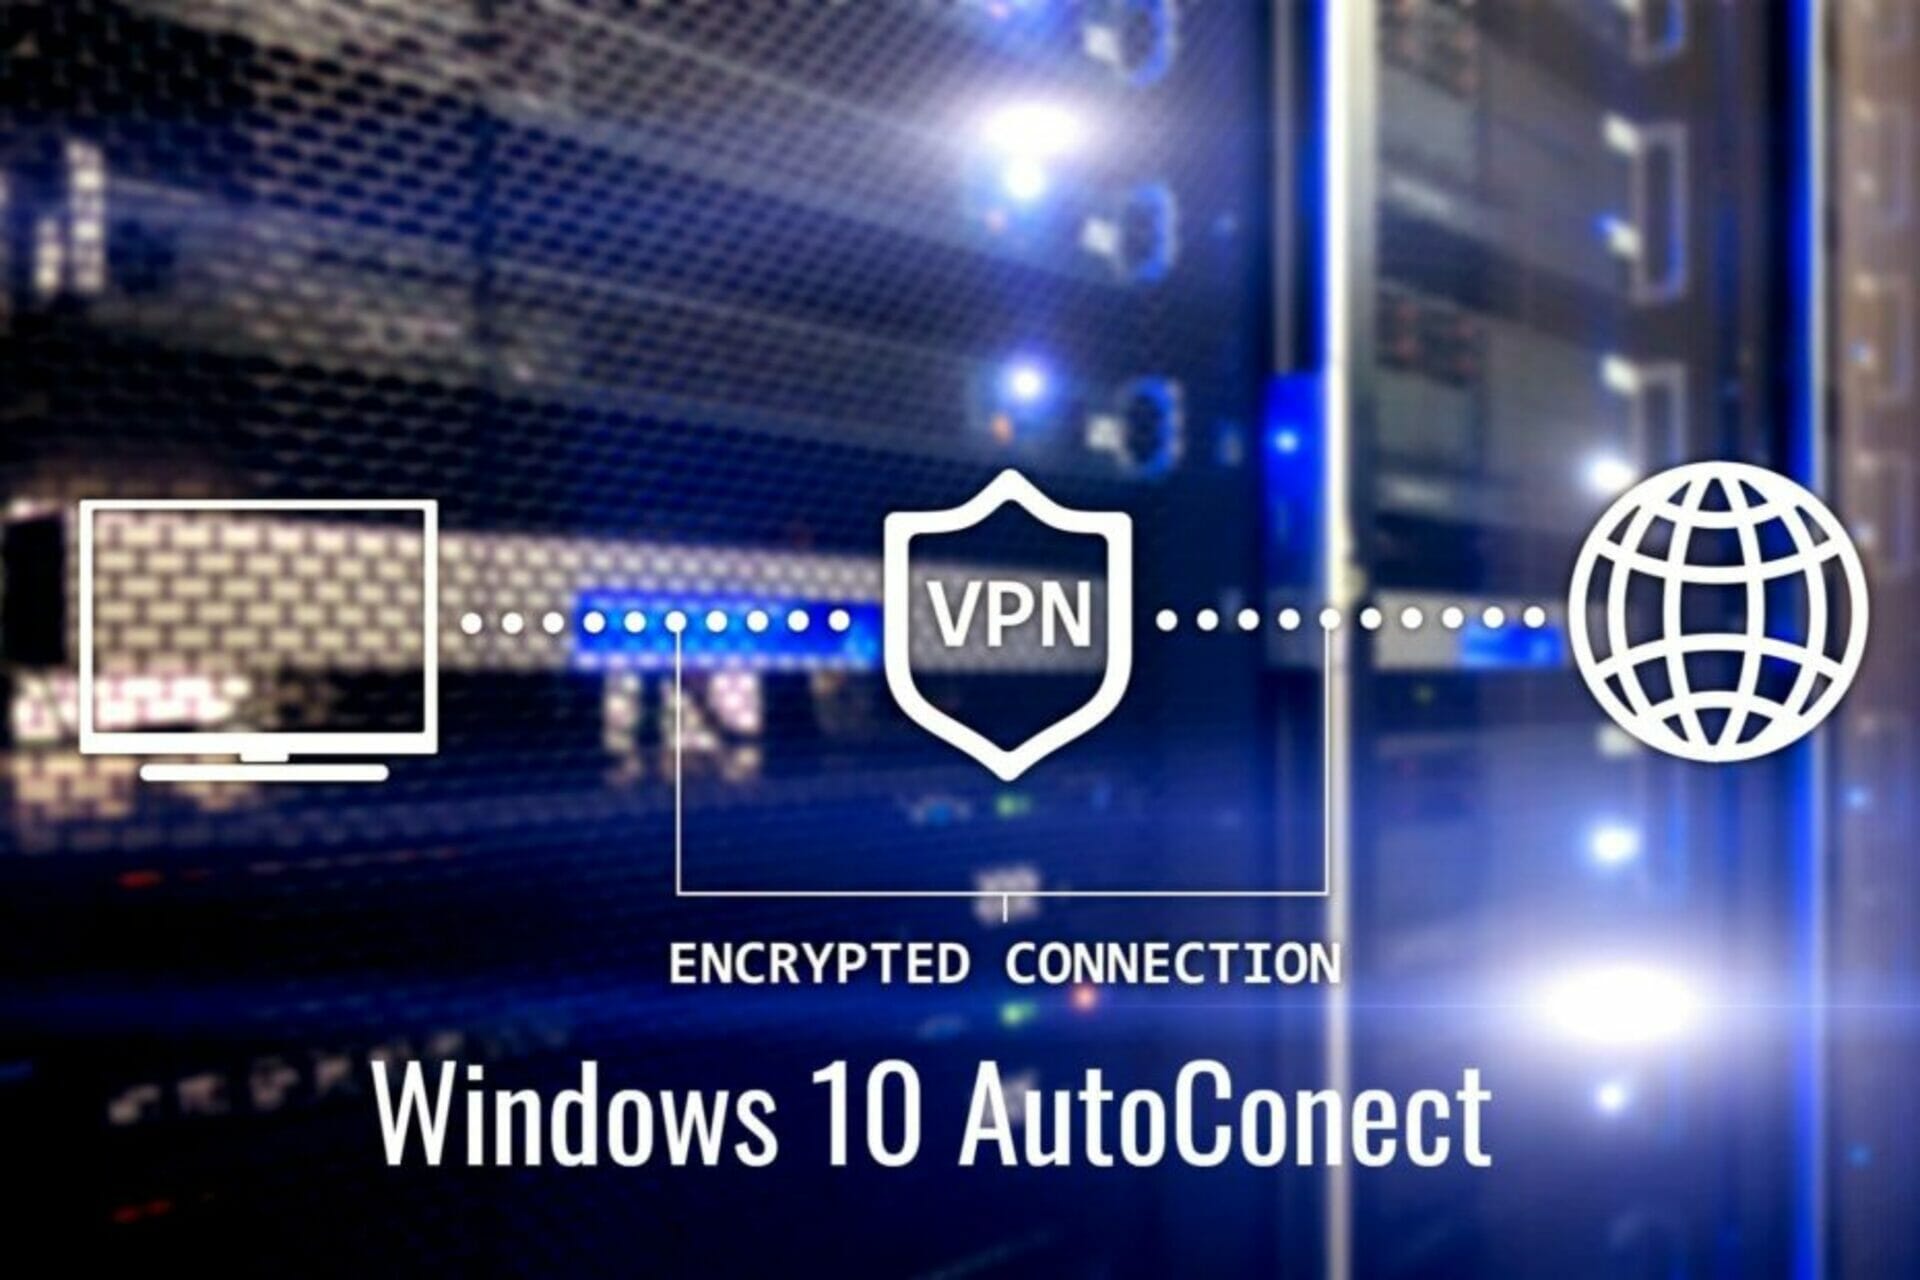 Cum sa te conectezi automat la VPN pe Windows 10 [Ghid]